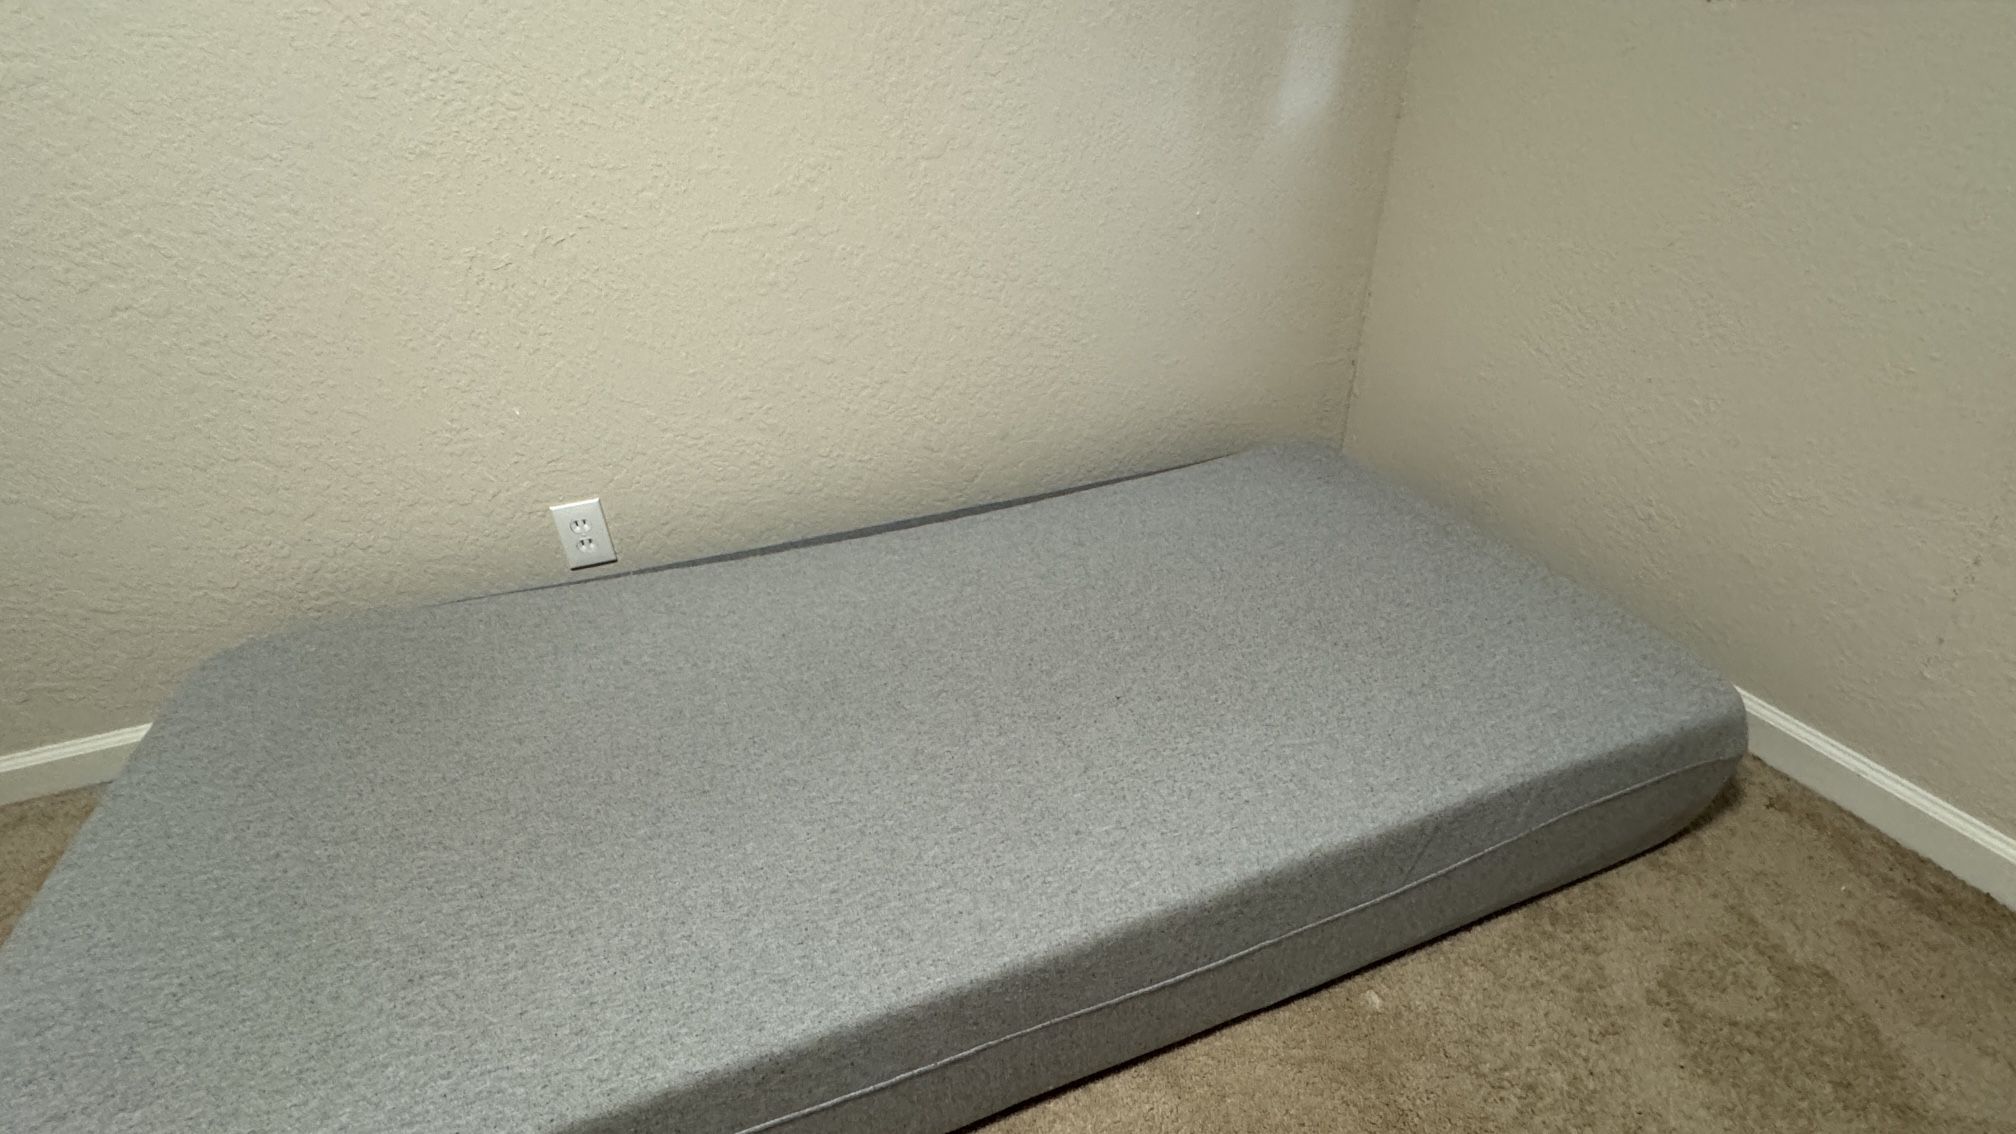 Barely used memory foam twin XL mattress